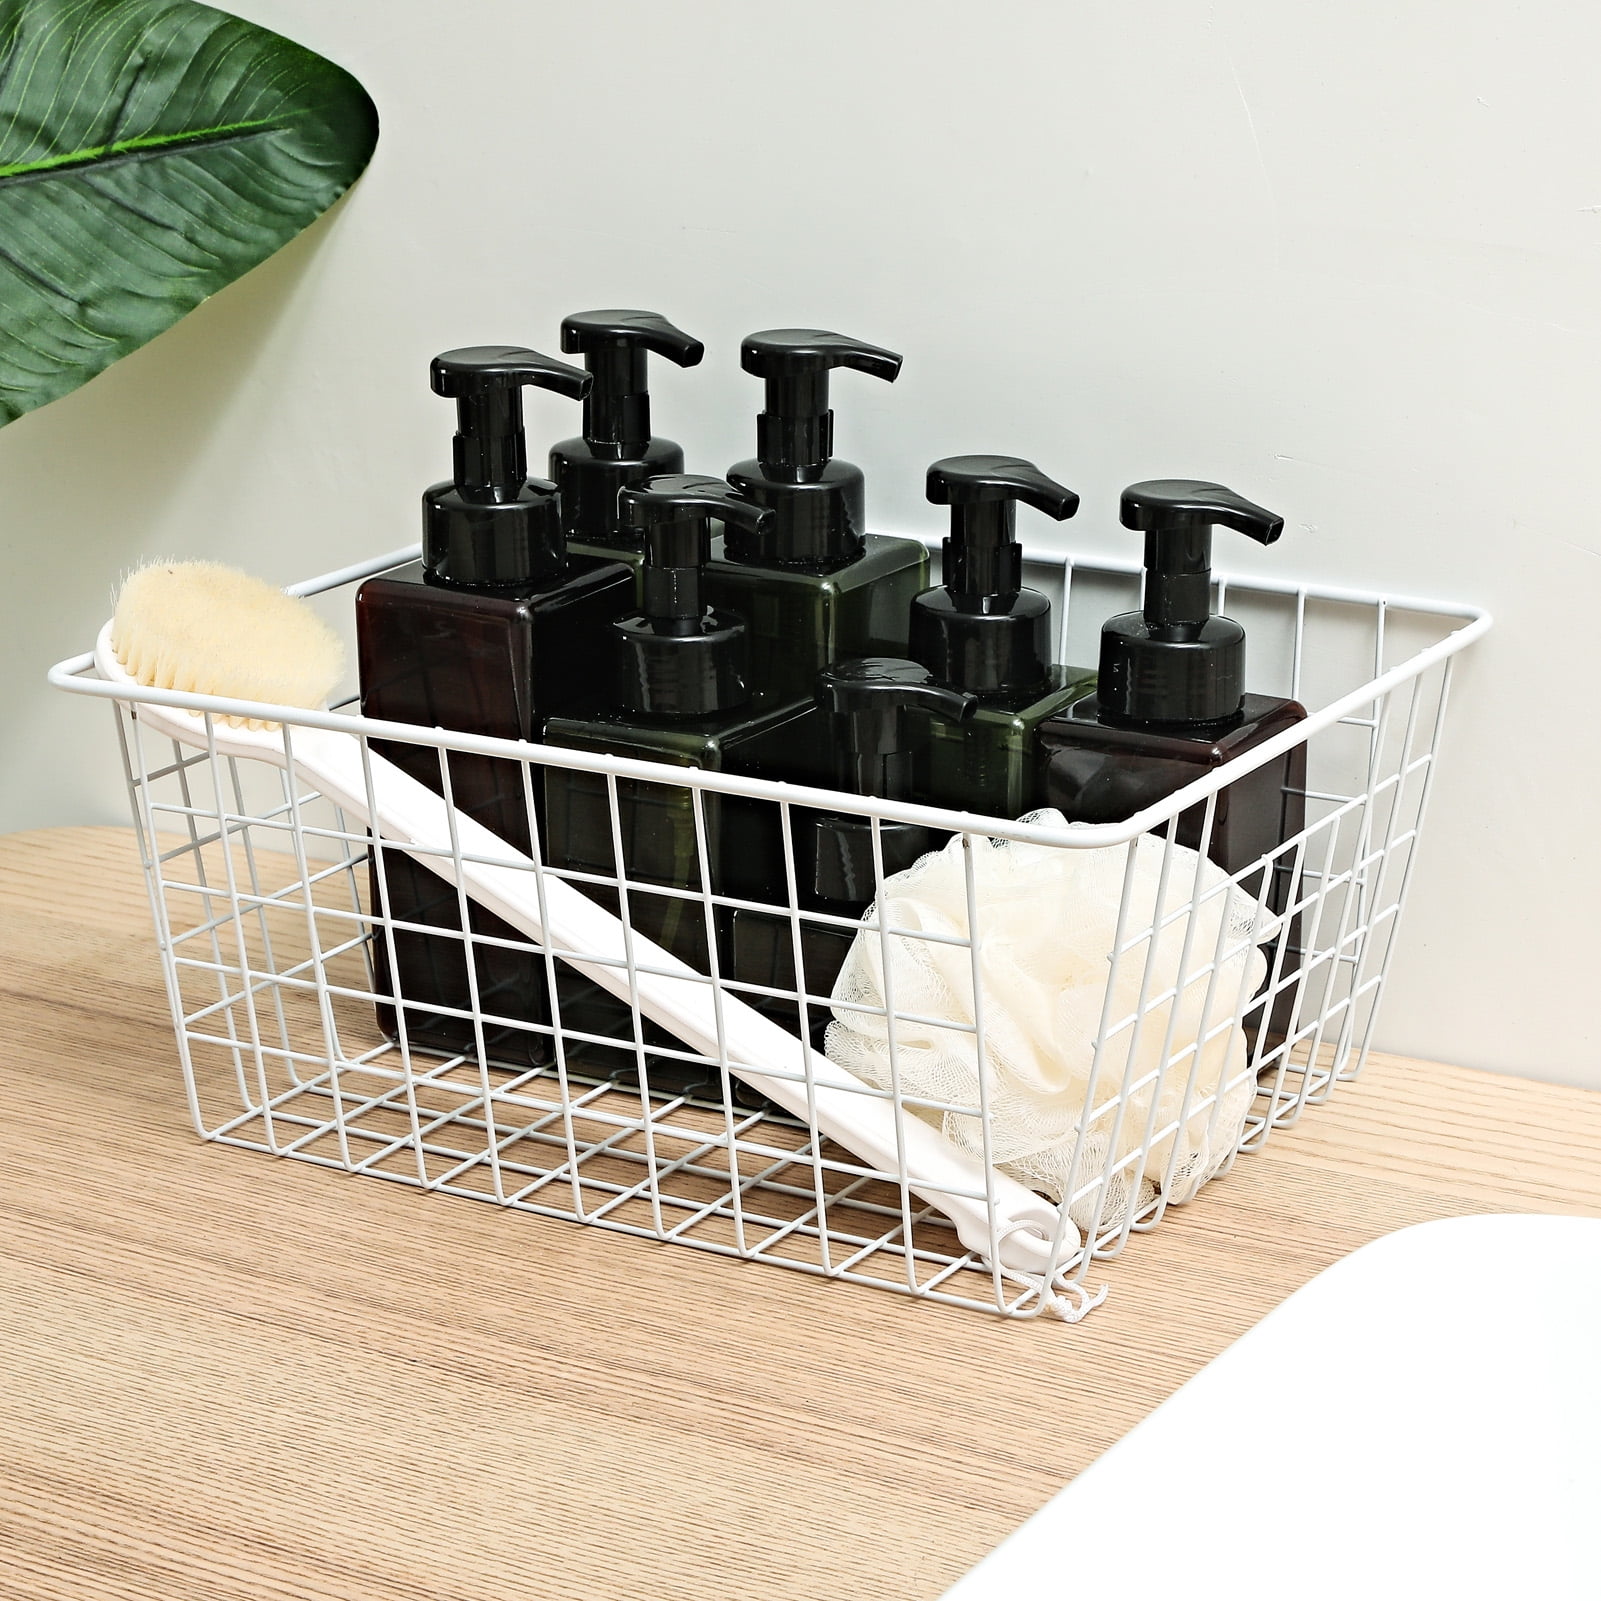 11 Best Freezer Baskets [Inc. Wire and Plastic] - Kitchen Seer